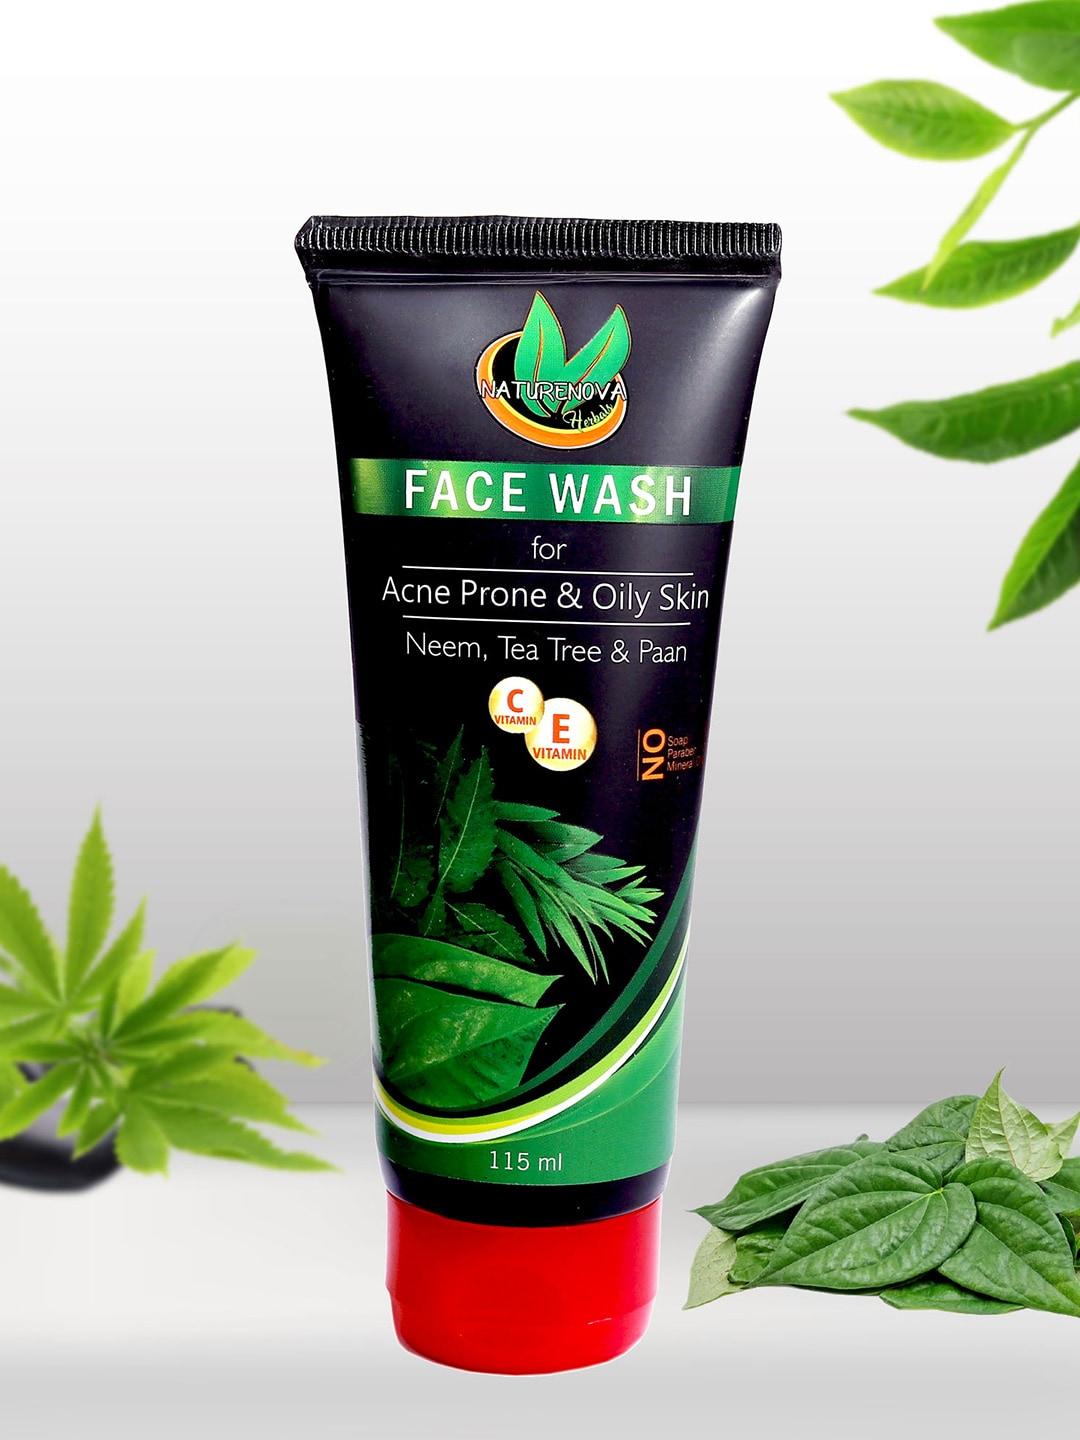 NatureNova Herbals Neem Tea Tree Face Wash for Acne Prone & Oily Skin - 115ml